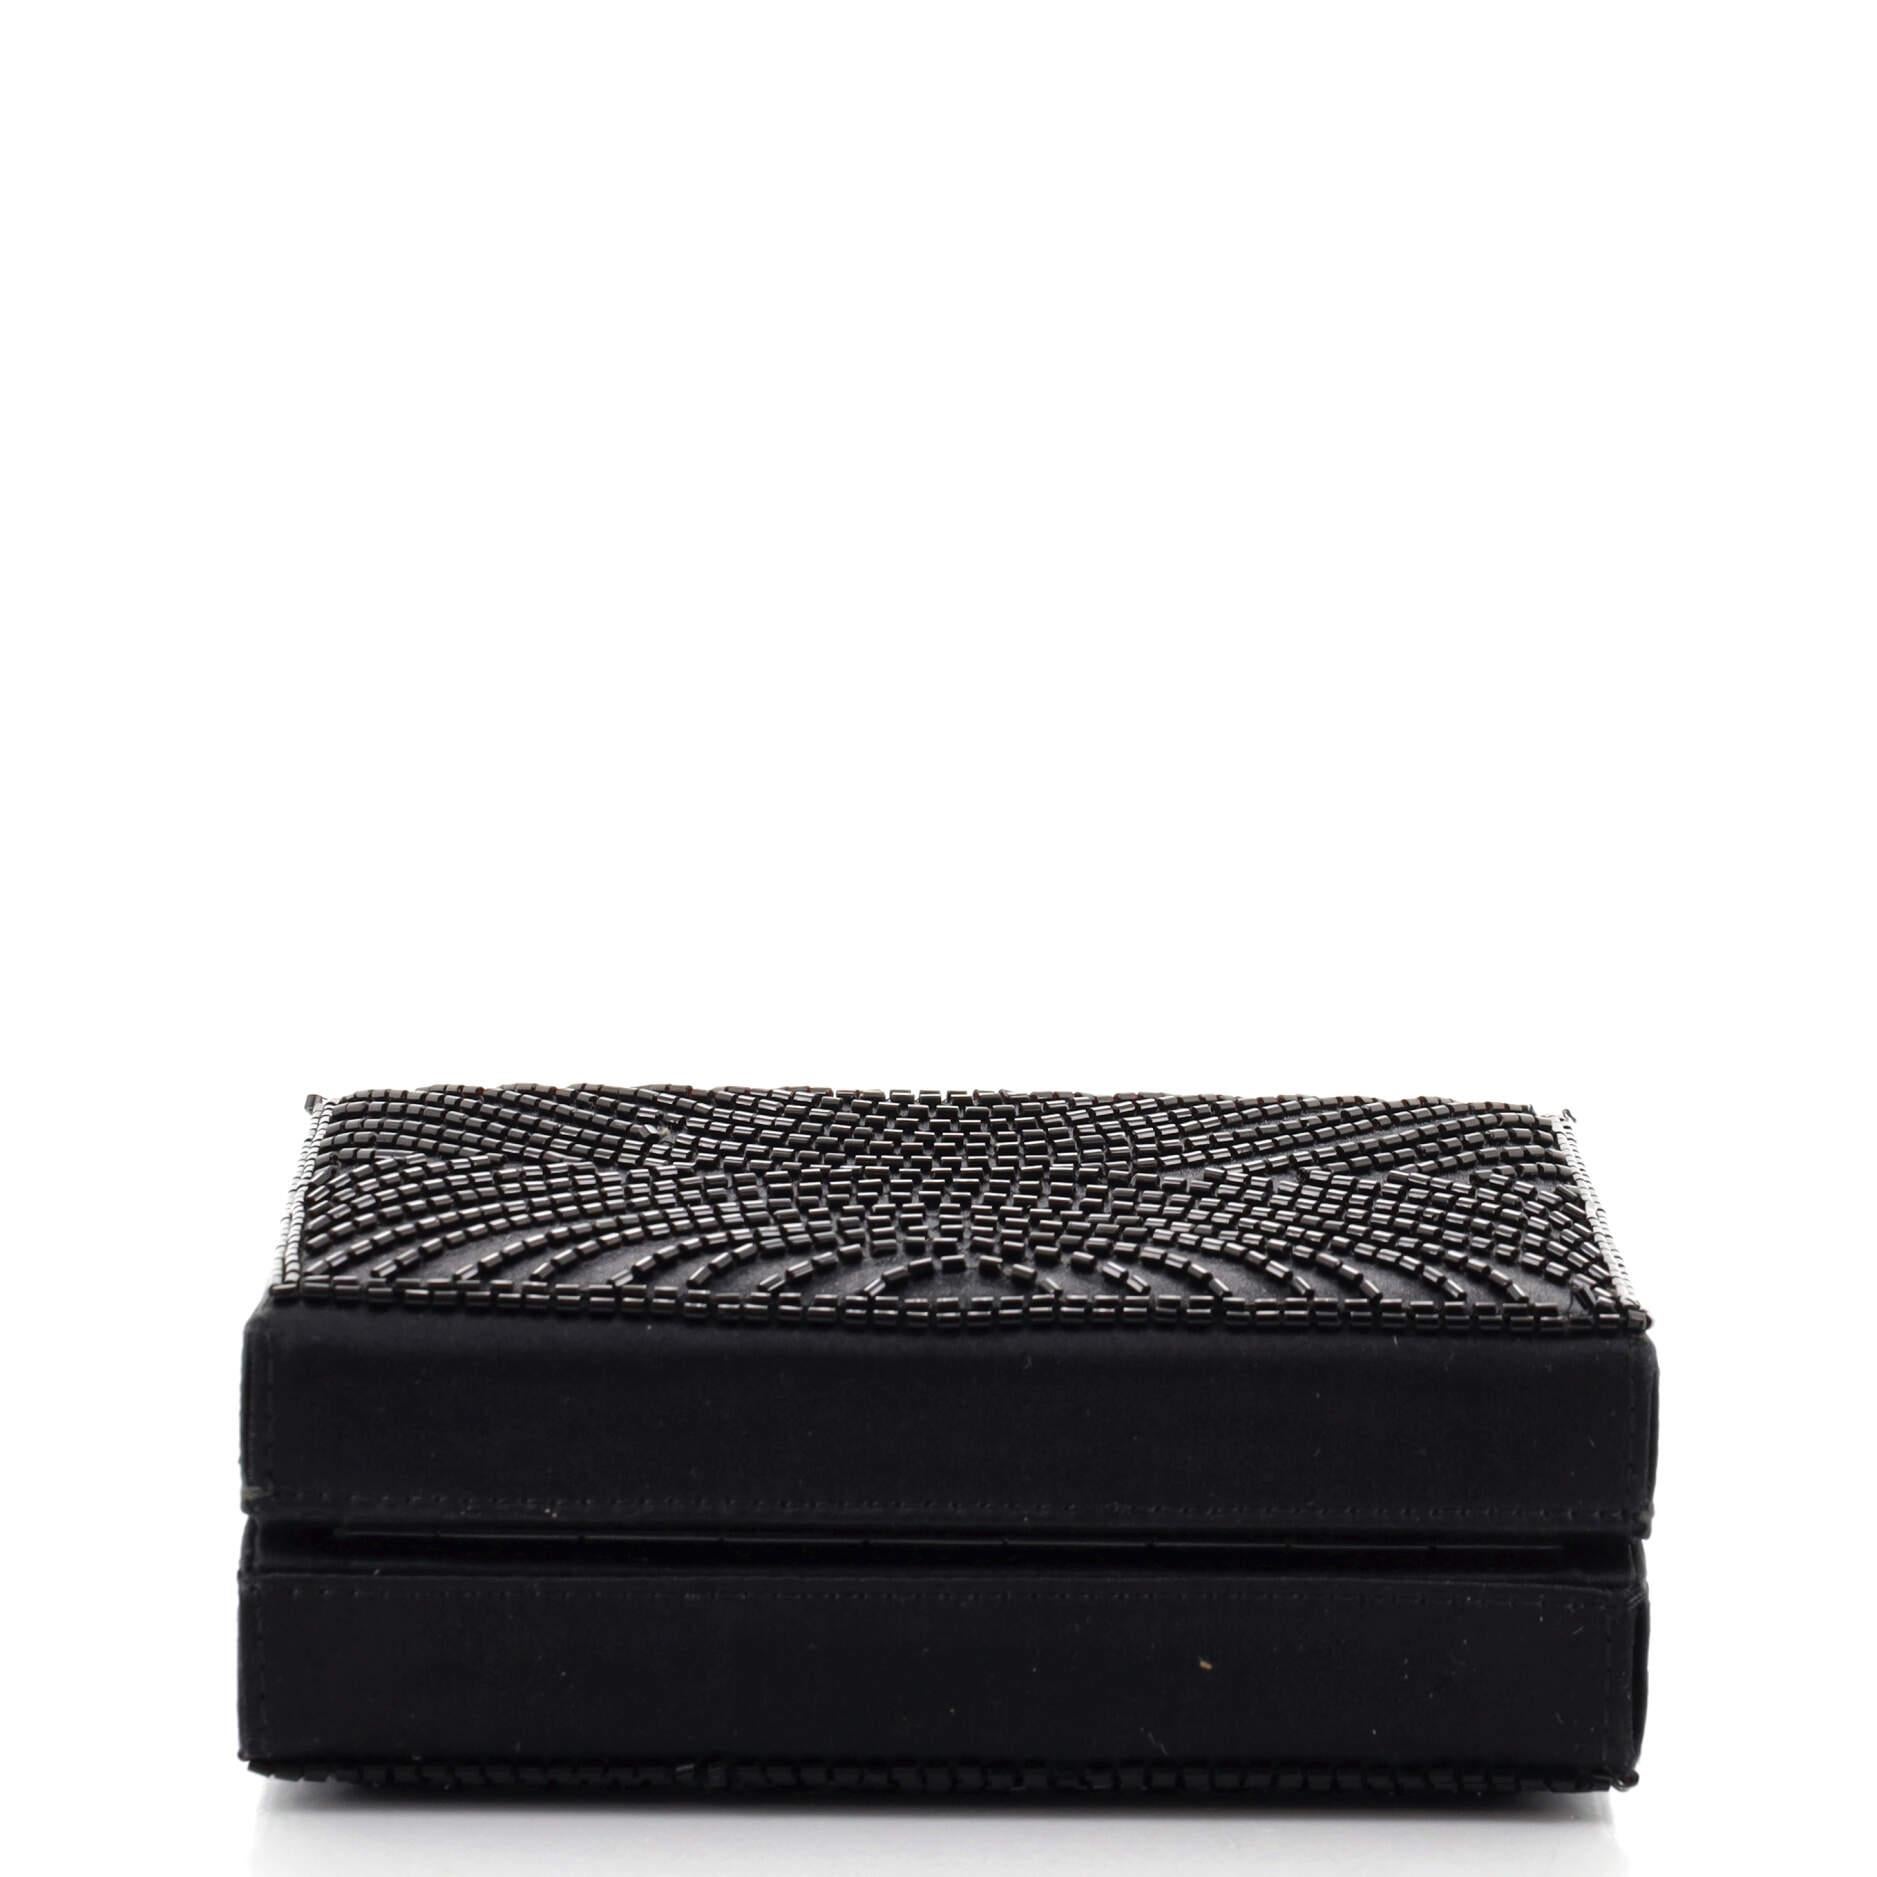 Black Chanel Box Frame Evening Bag Beaded Satin Small